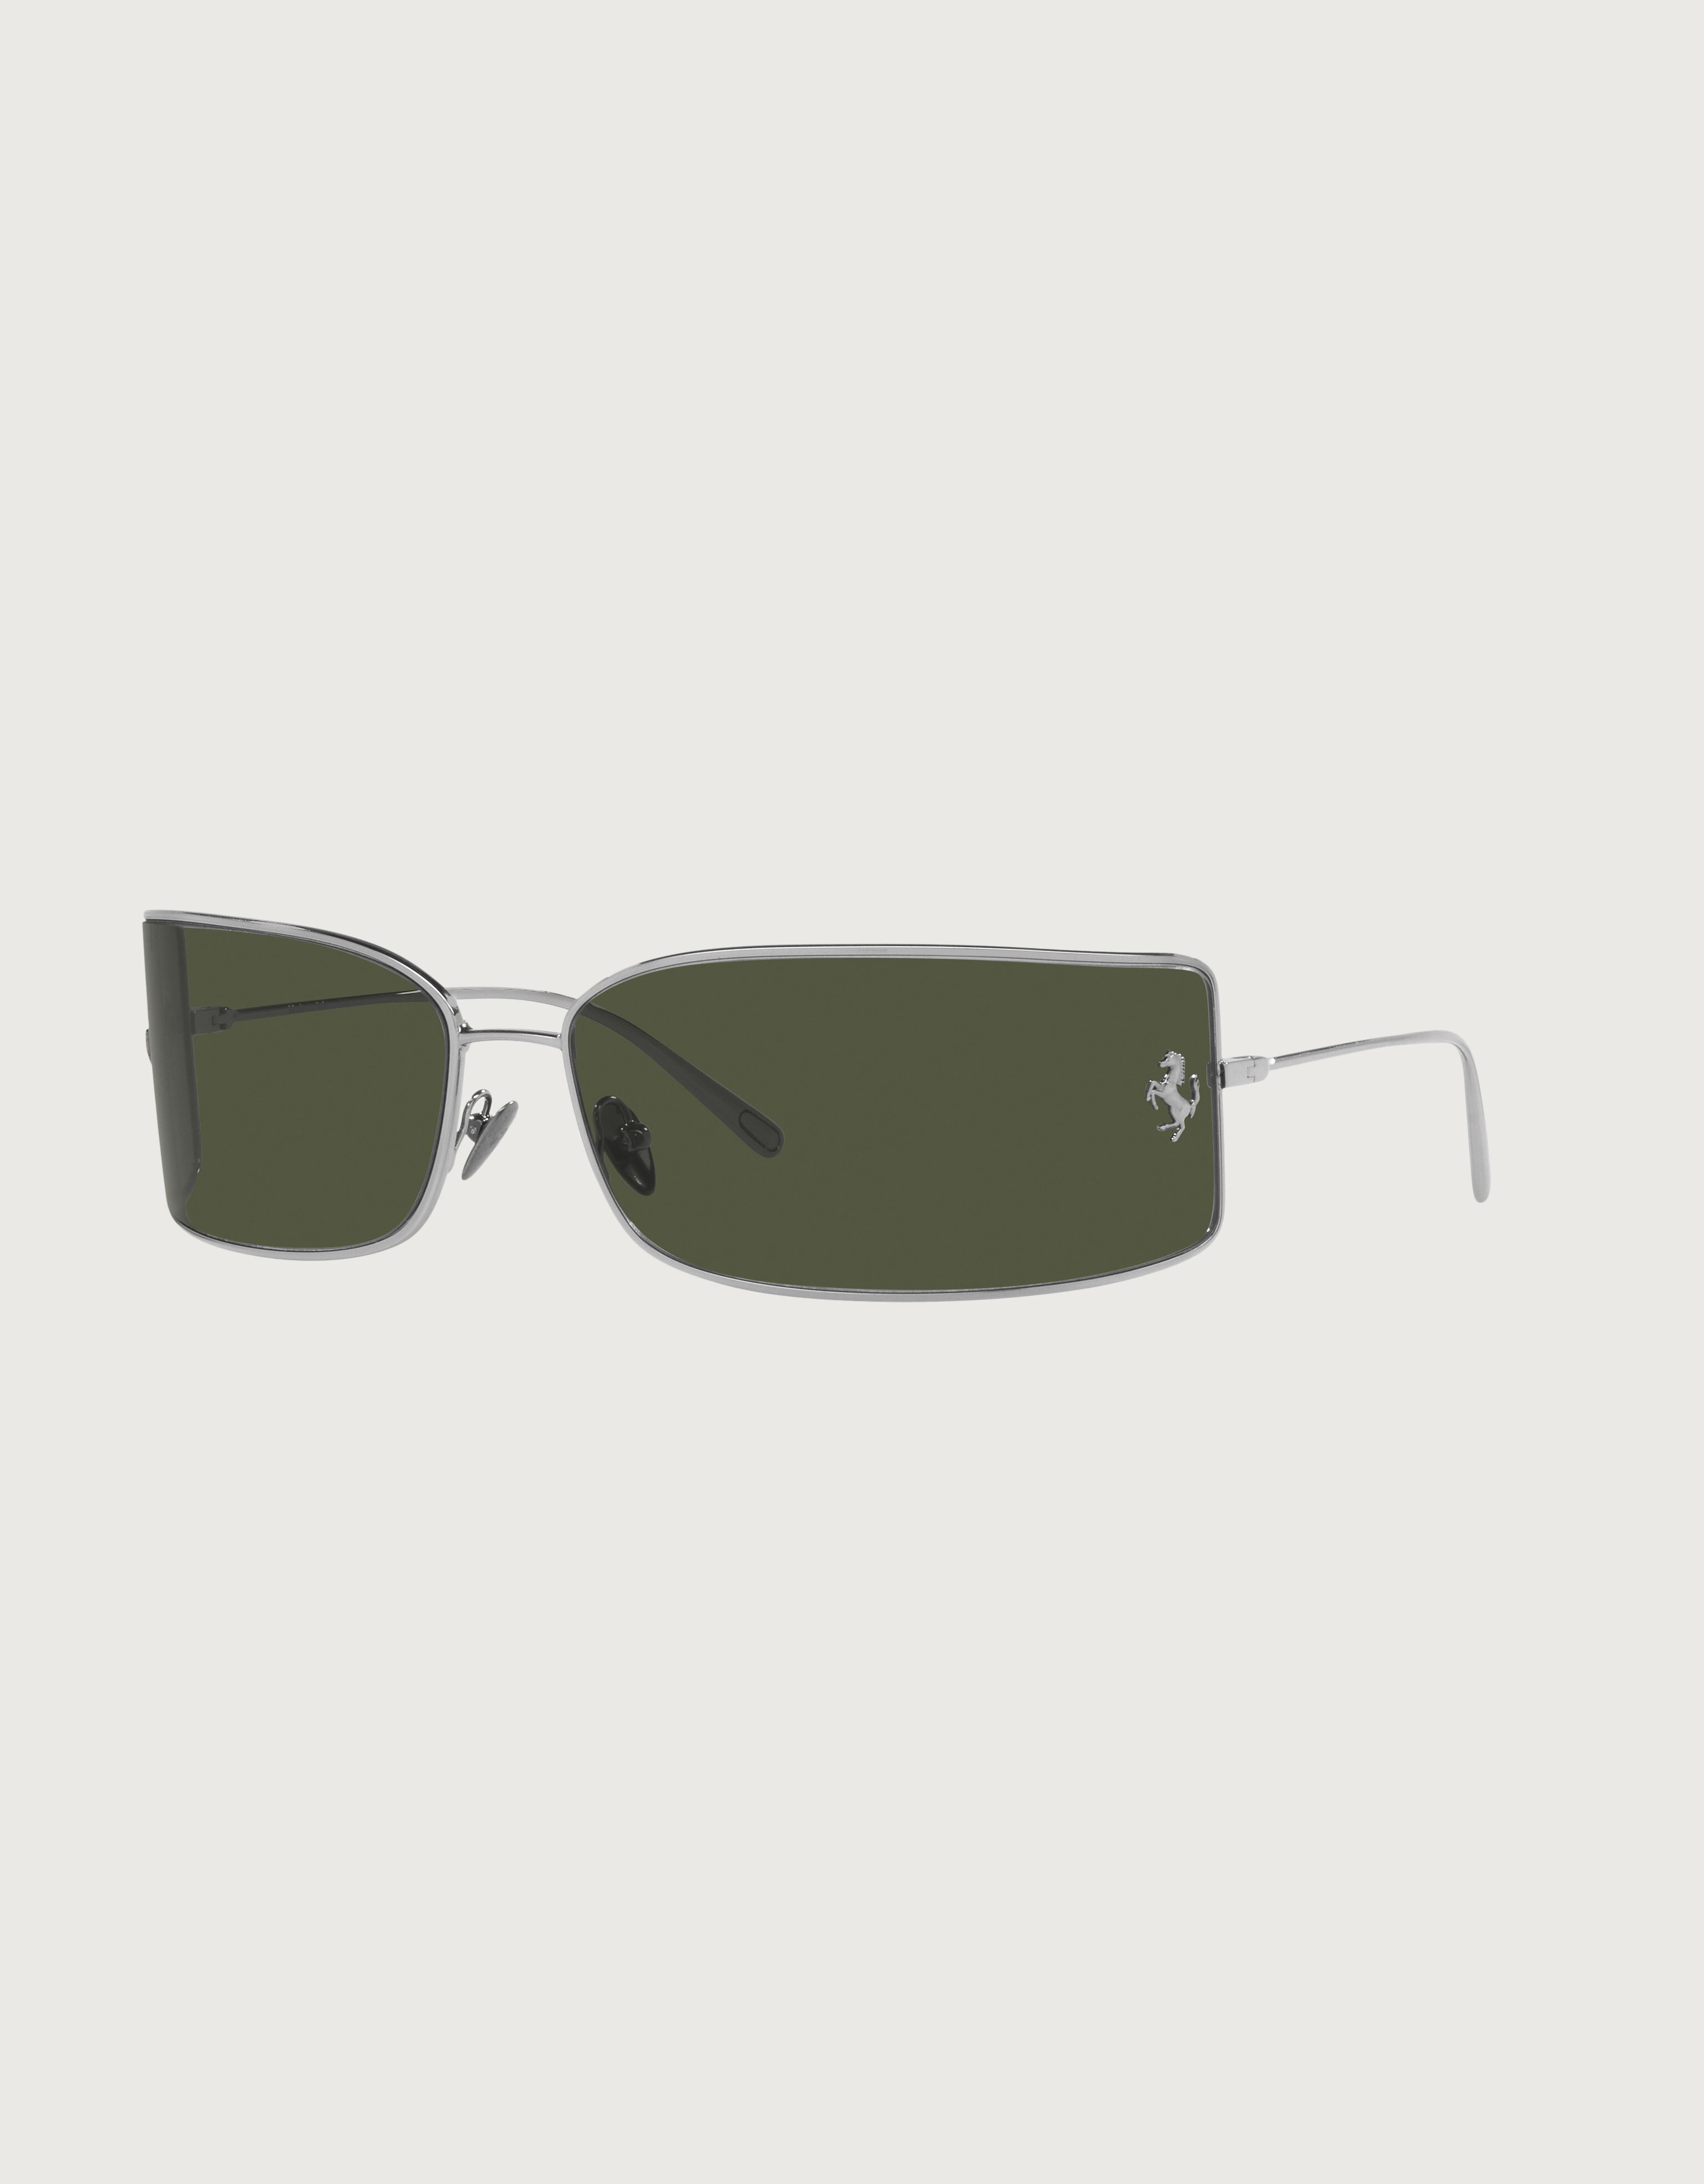 Ferrari Ferrari shield sunglasses with green lenses 深灰色 F0641f